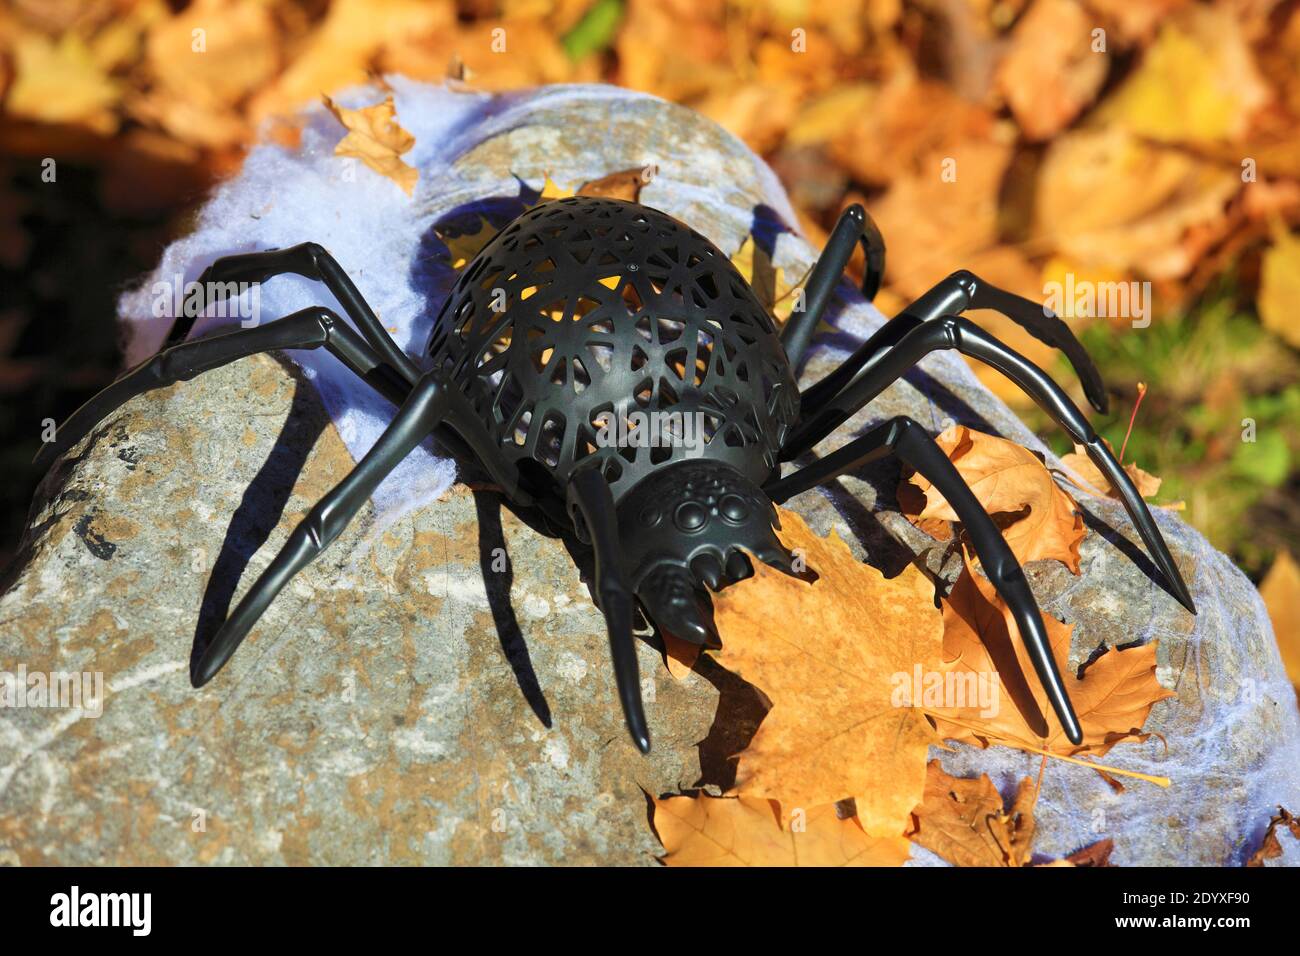 Spider, Halloween, decoration, Stock Photo